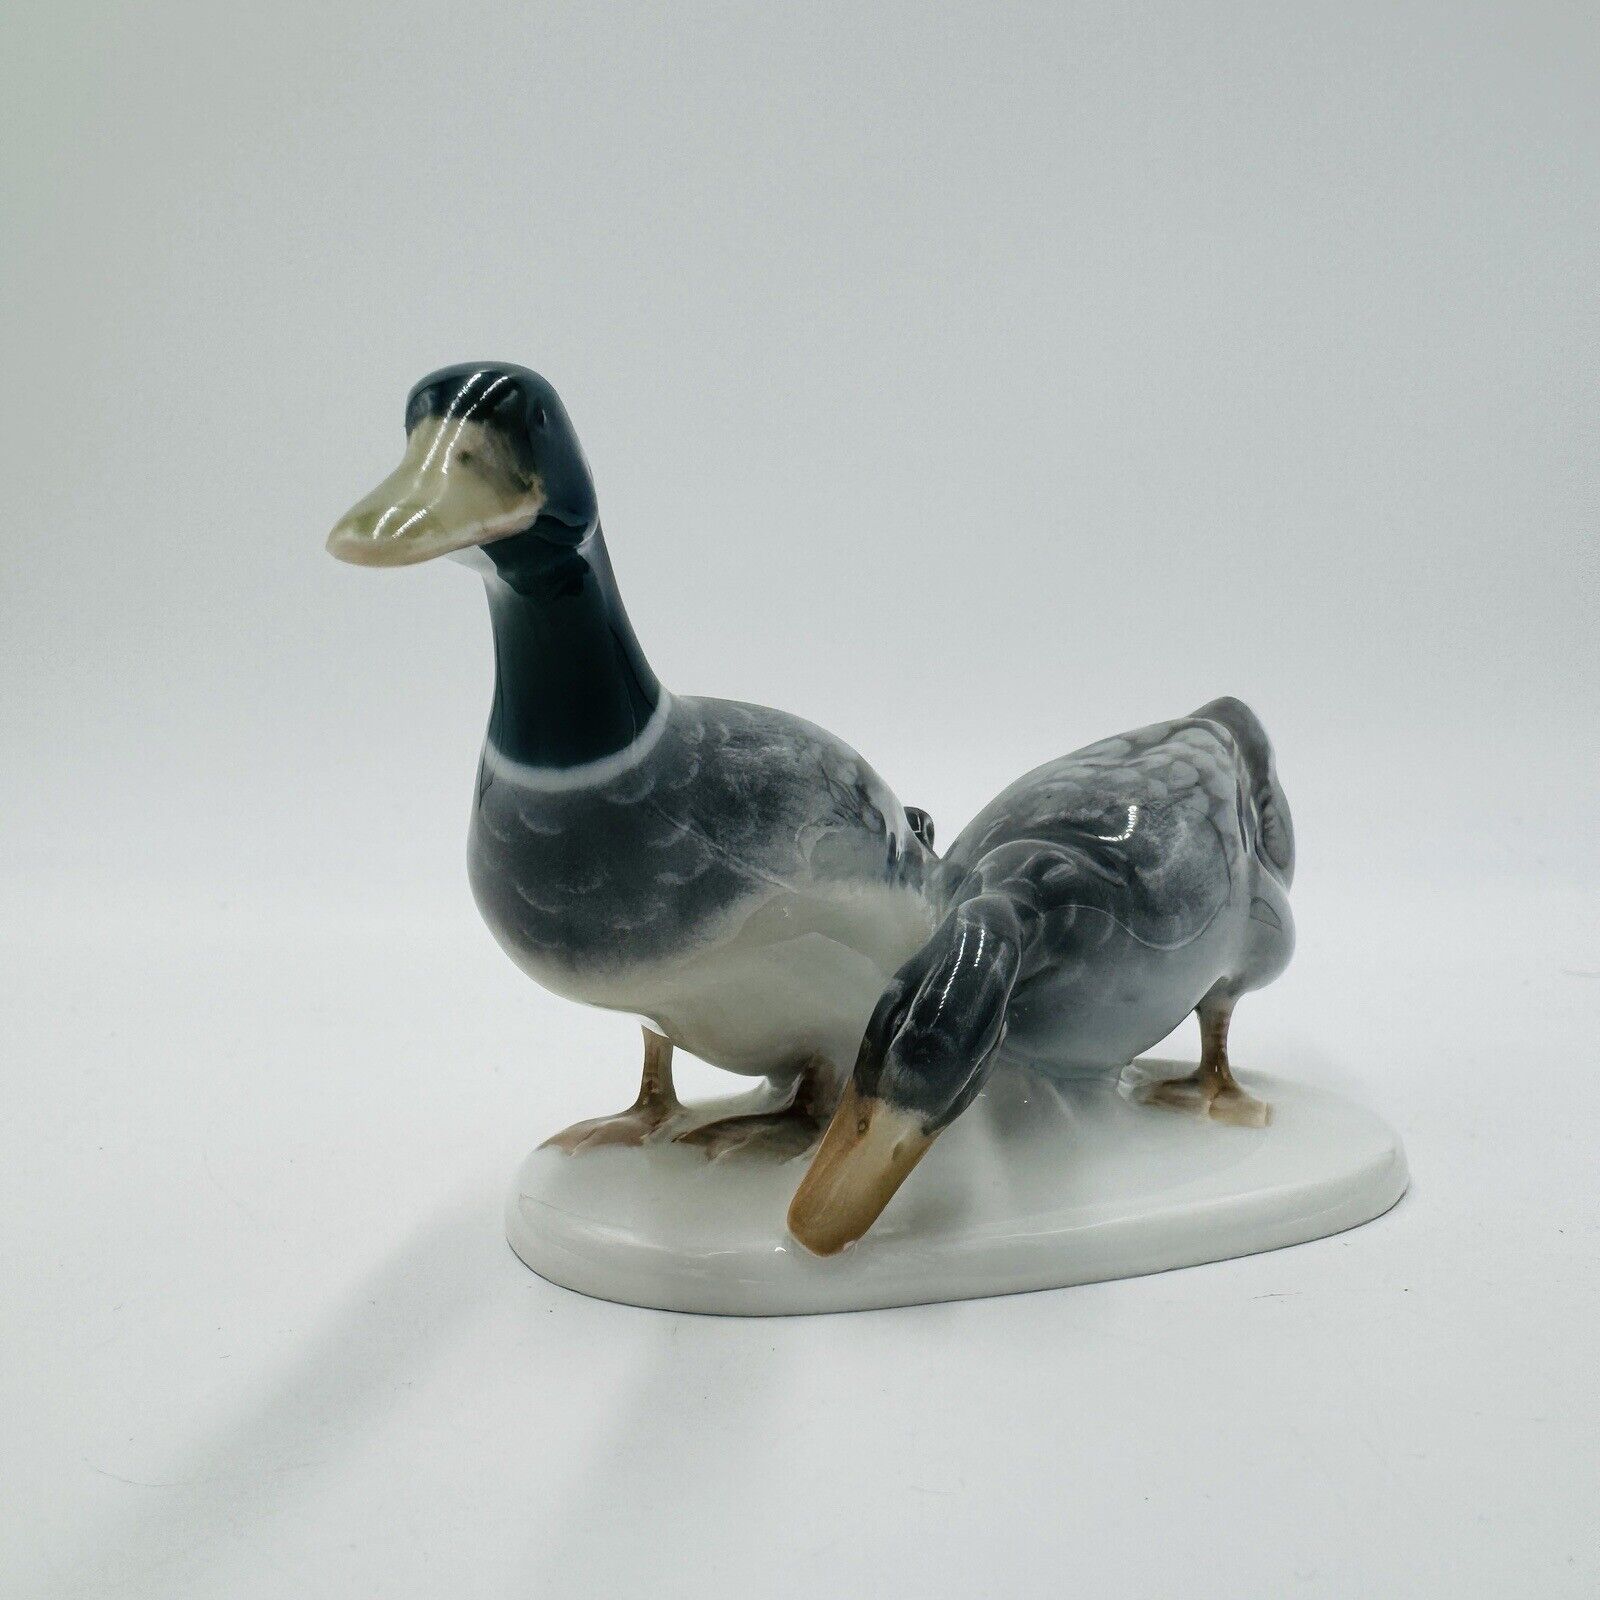 Rosenthal Porcelain Germany Himmelstoss ducks figurine 3in x 6in Vintage 